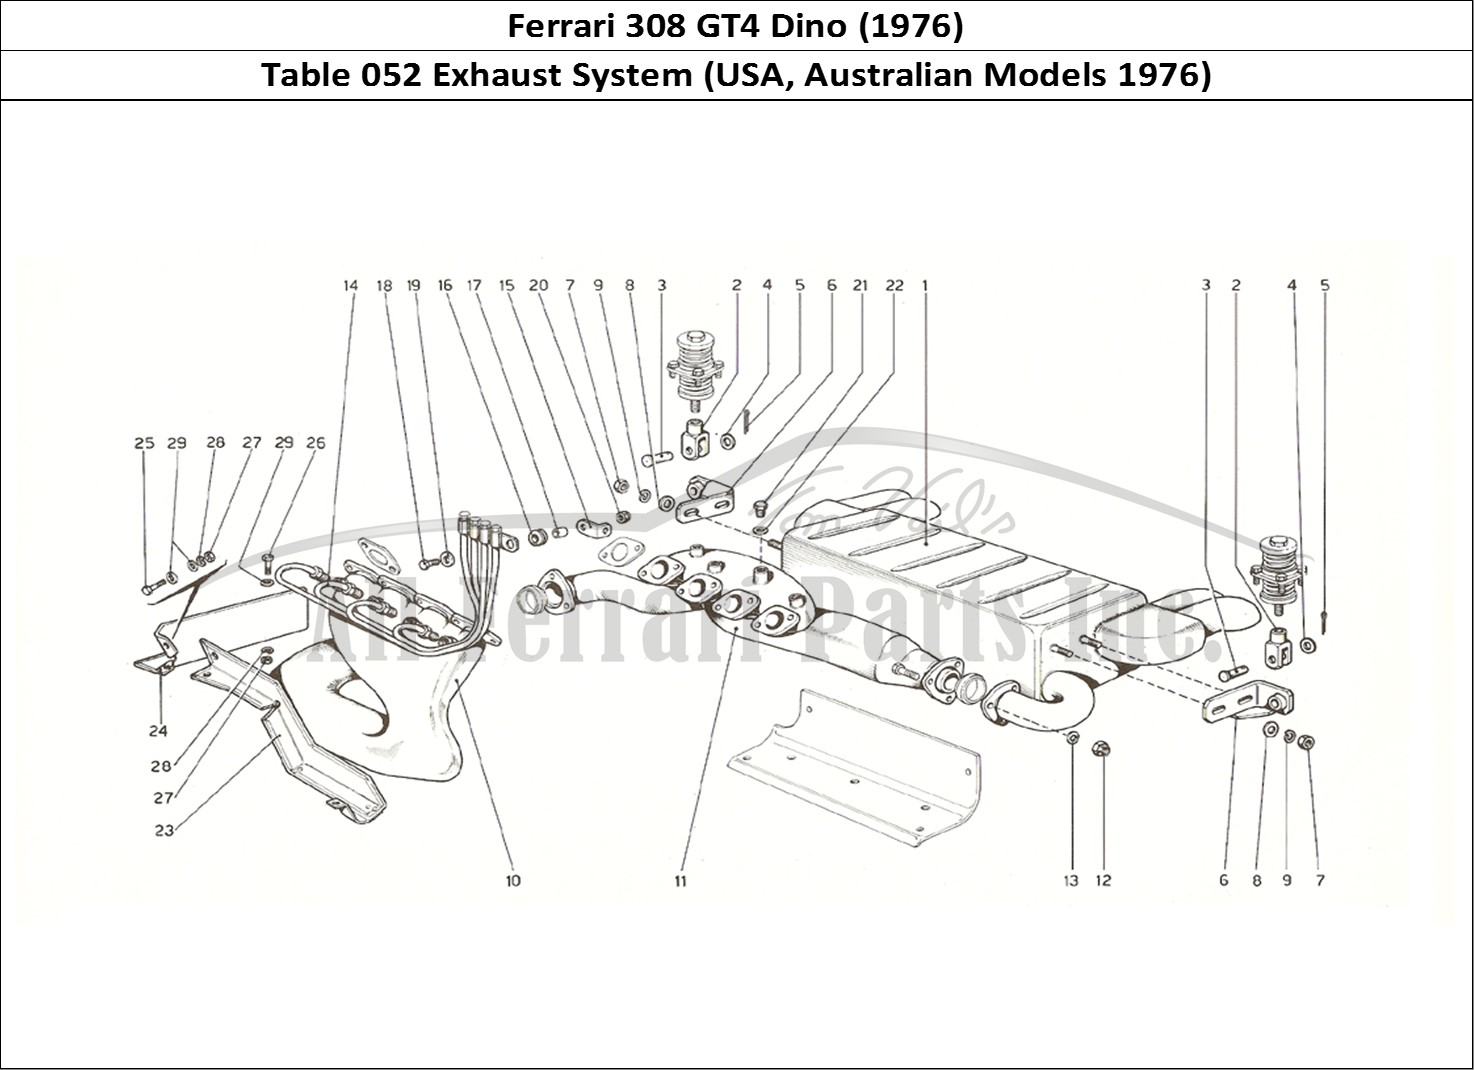 Ferrari Parts Ferrari 308 GT4 Dino (1976) Page 052 Exhaust system (U.S. and